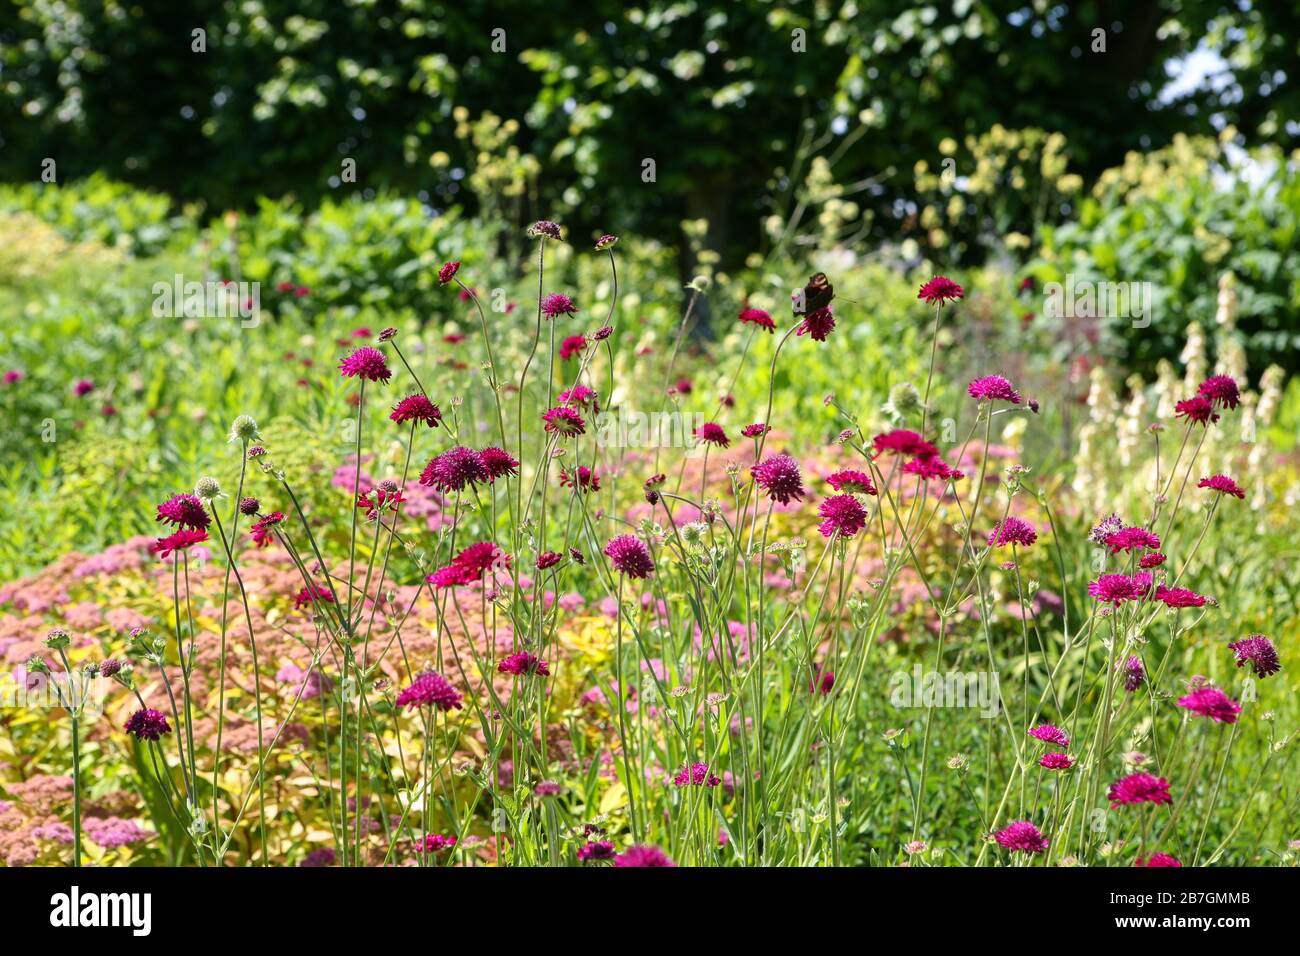 Knautia macedonica in flower in a herbaceous border, garden setting Stock Photo